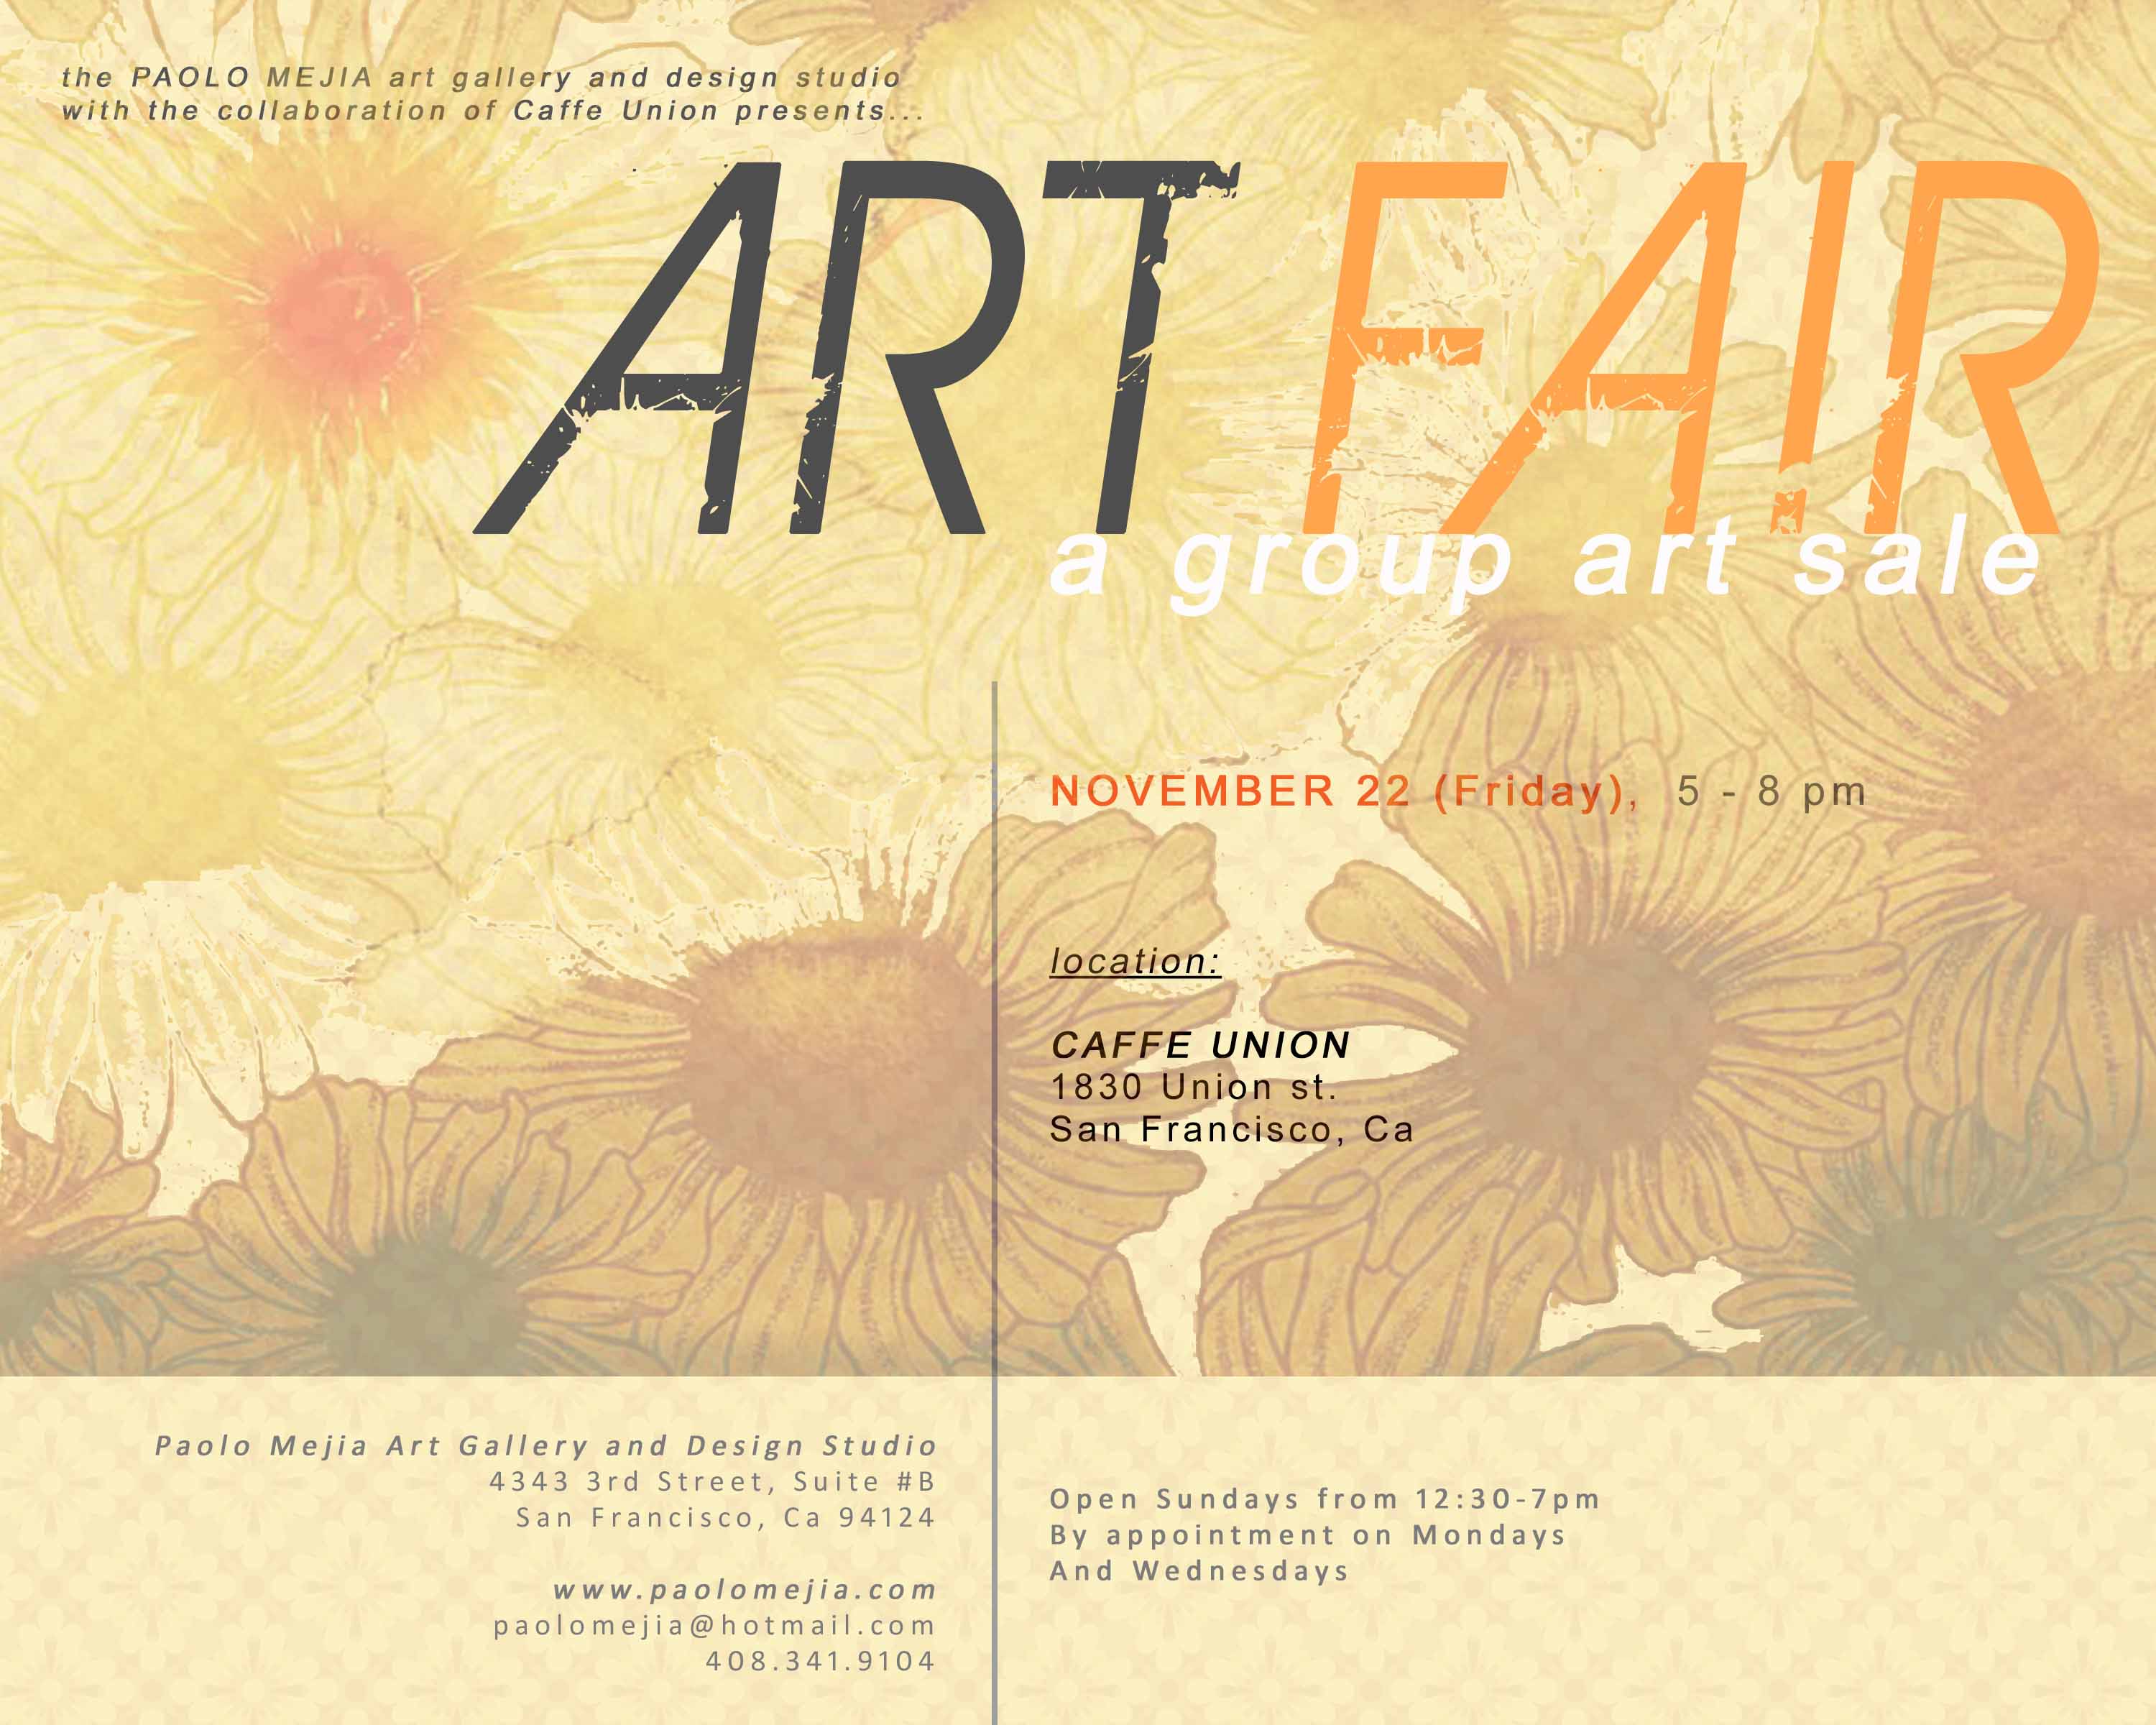 Art Fair - a group art sale